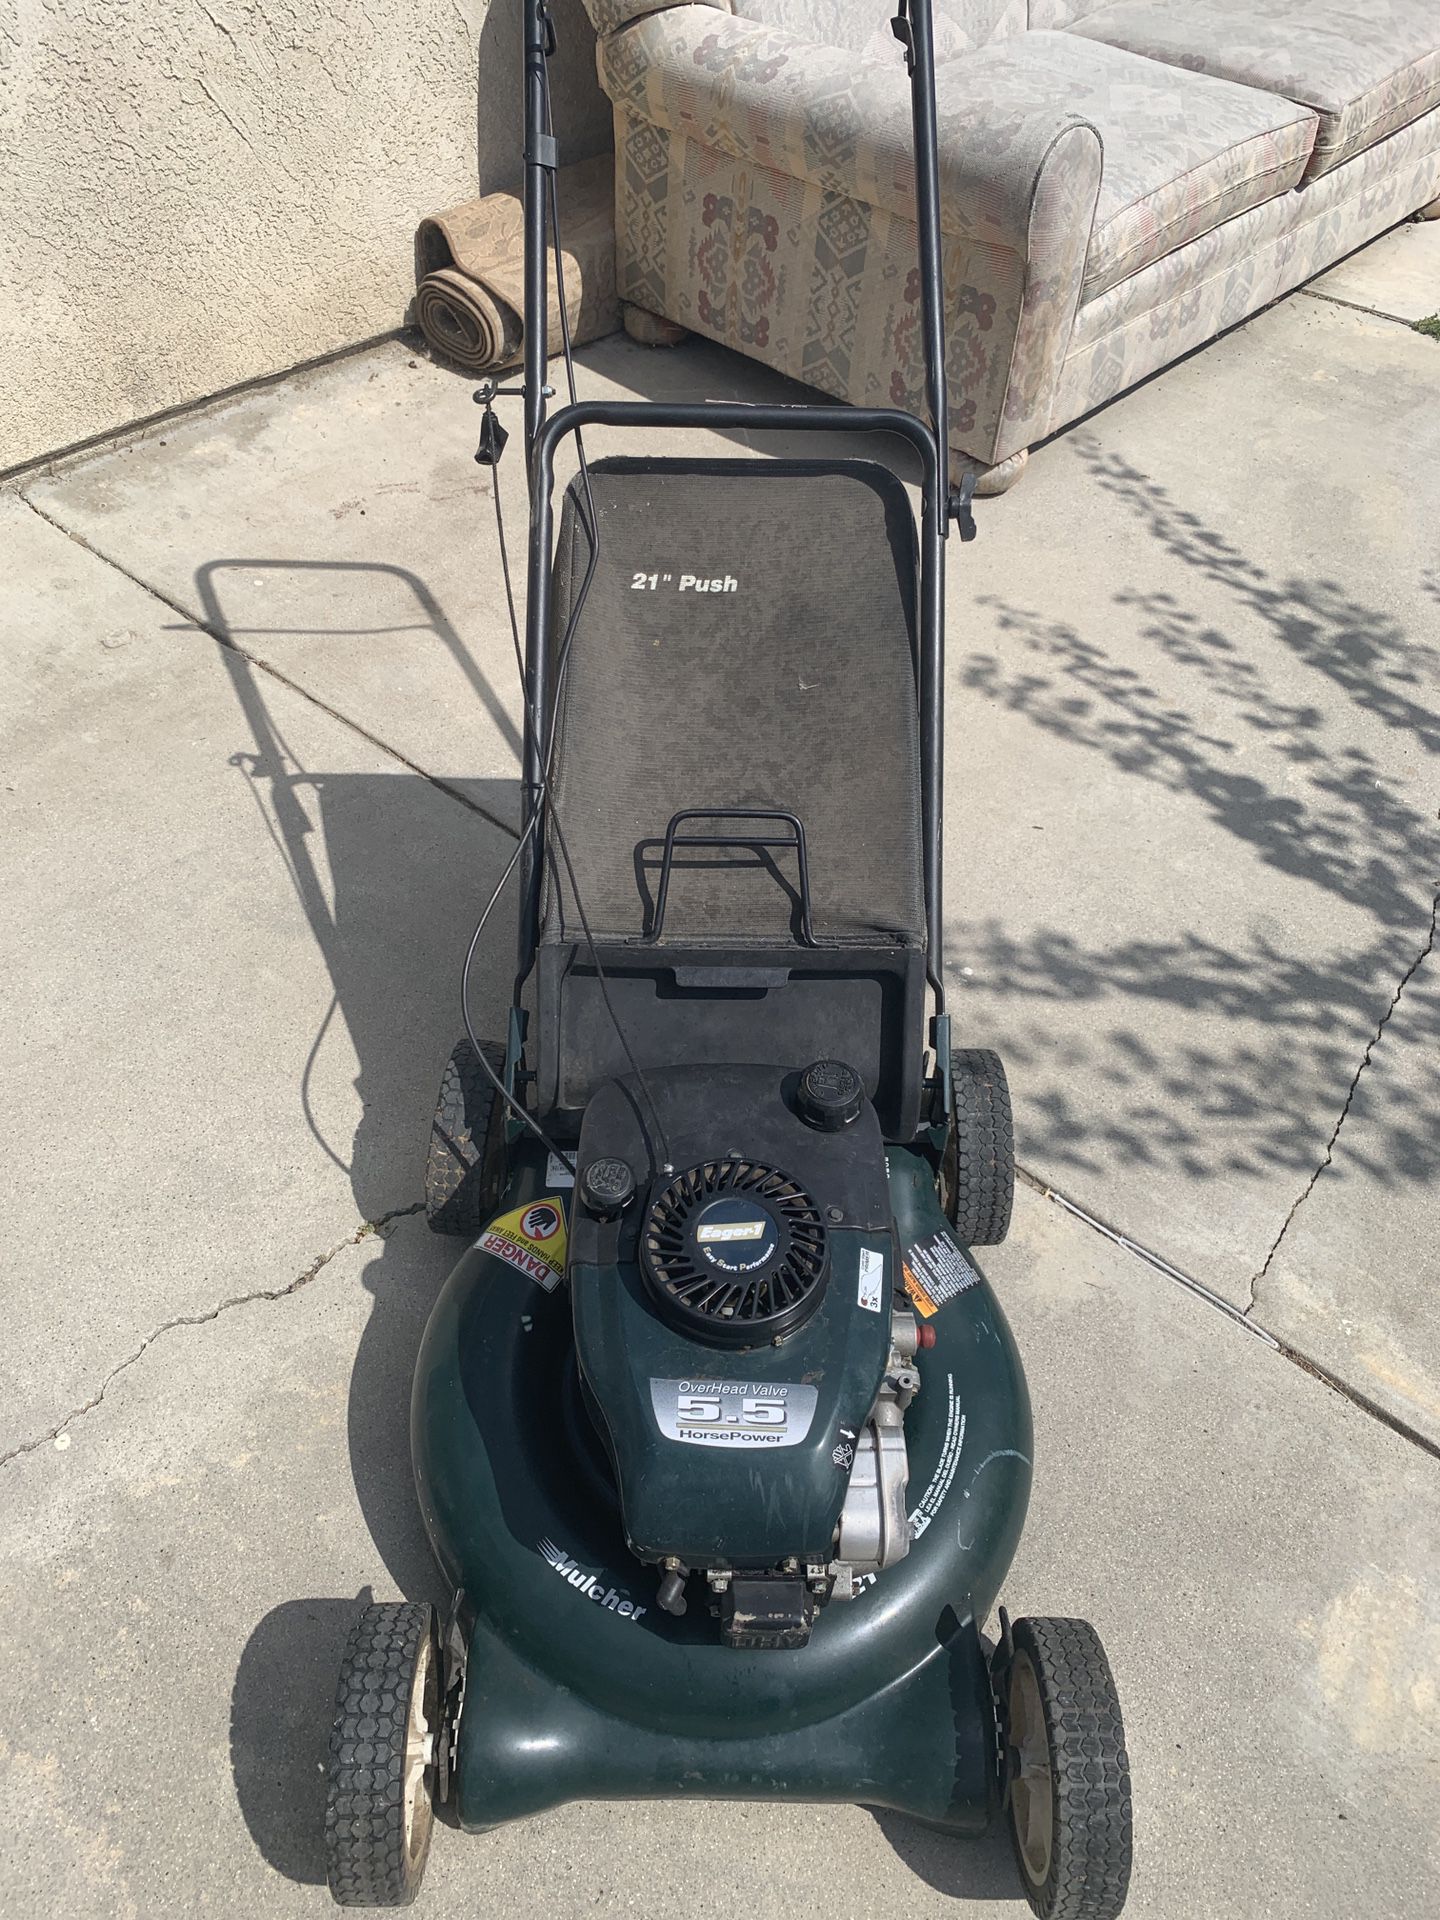 Mulcher push lawnmower 21” in good condition